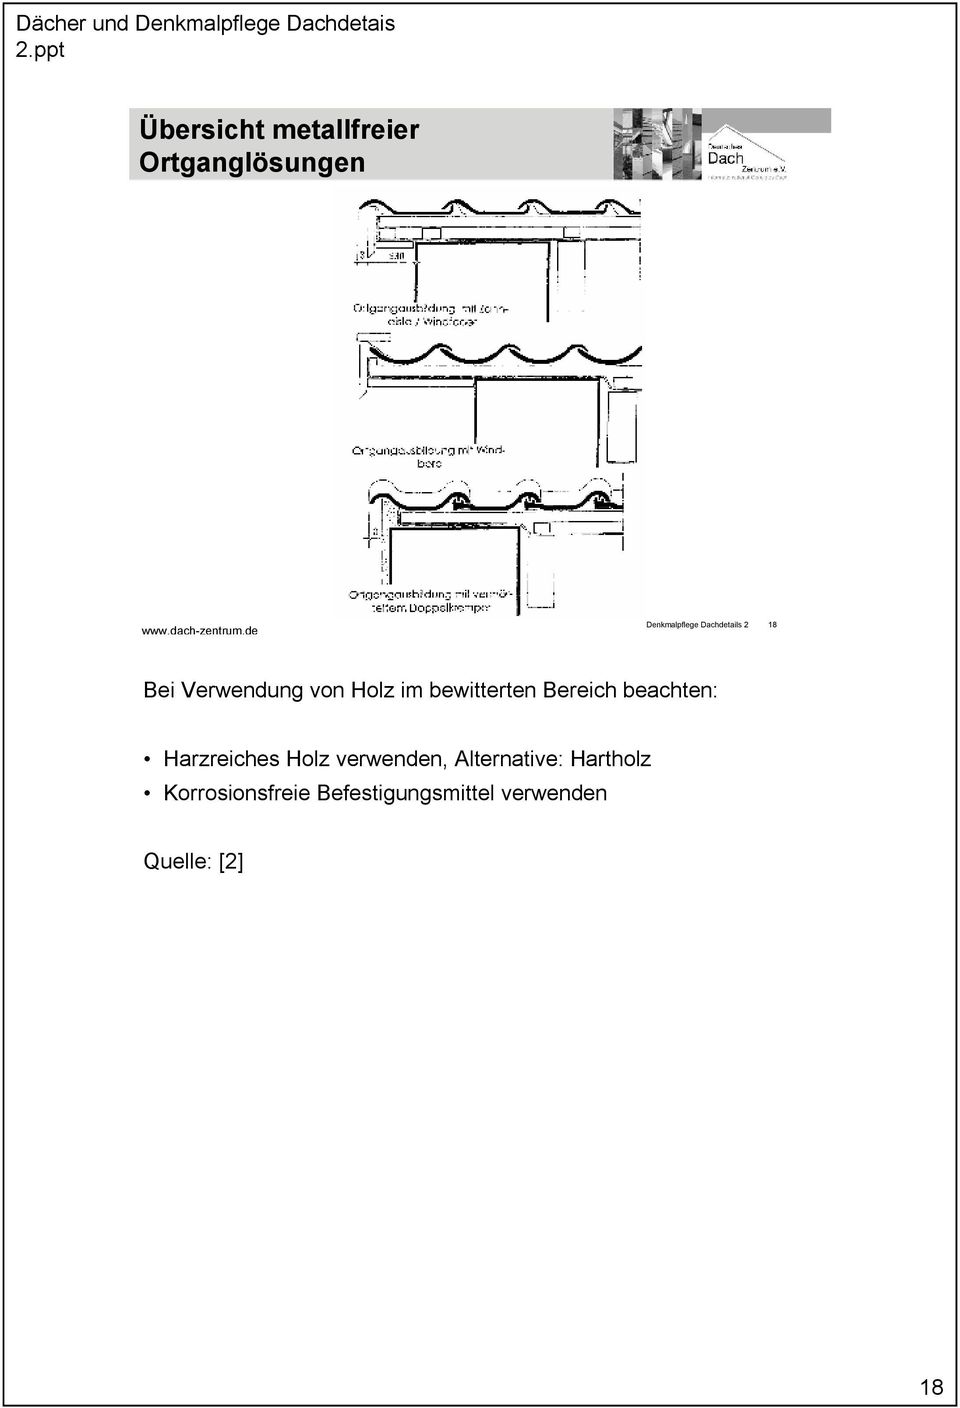 Denkmalpflege Dachdetails II - PDF Free Download